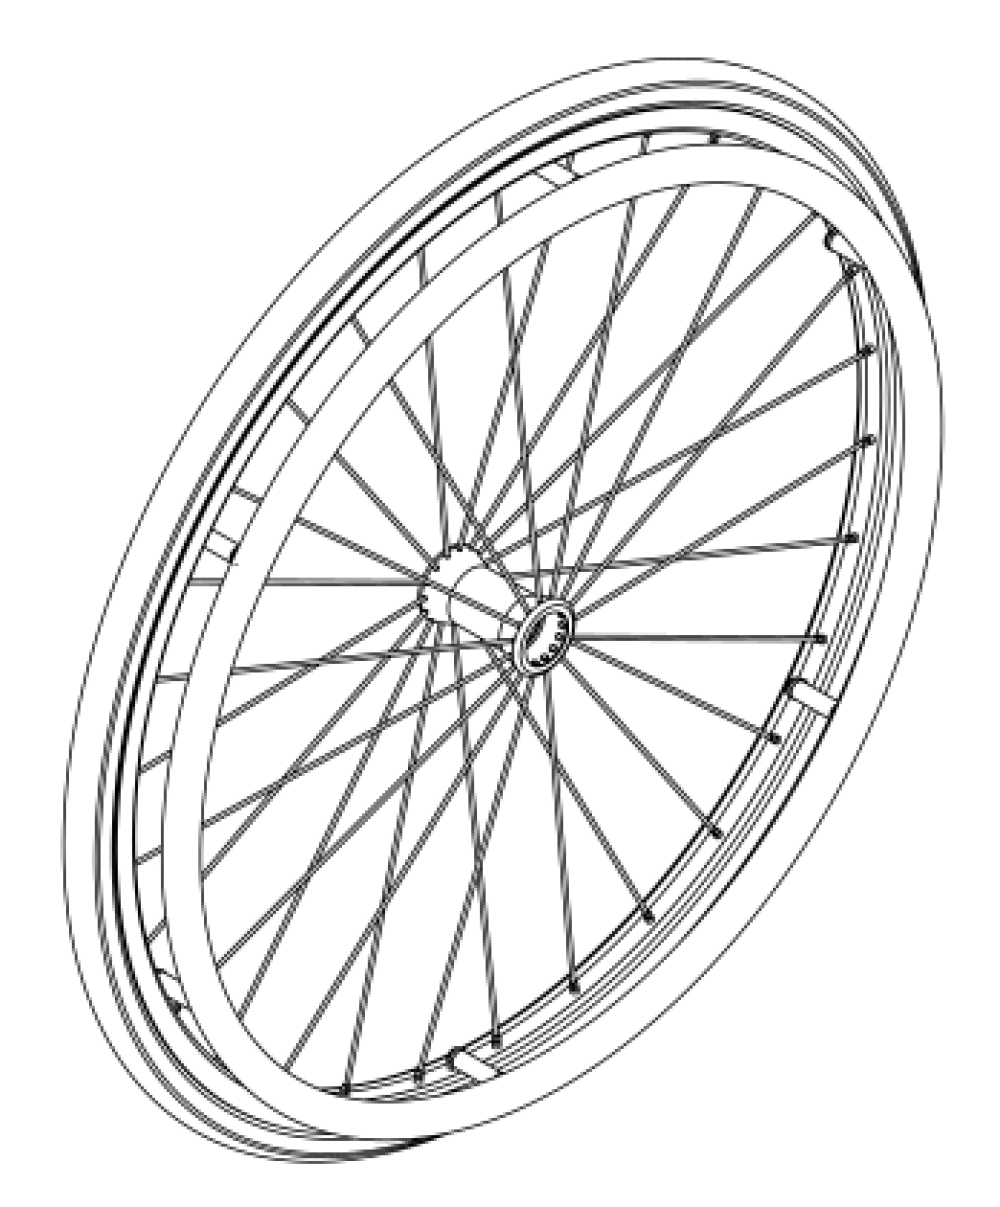 (discontinued) Rogue Xp Spoke Wheel / Tire / Handrim Kits parts diagram